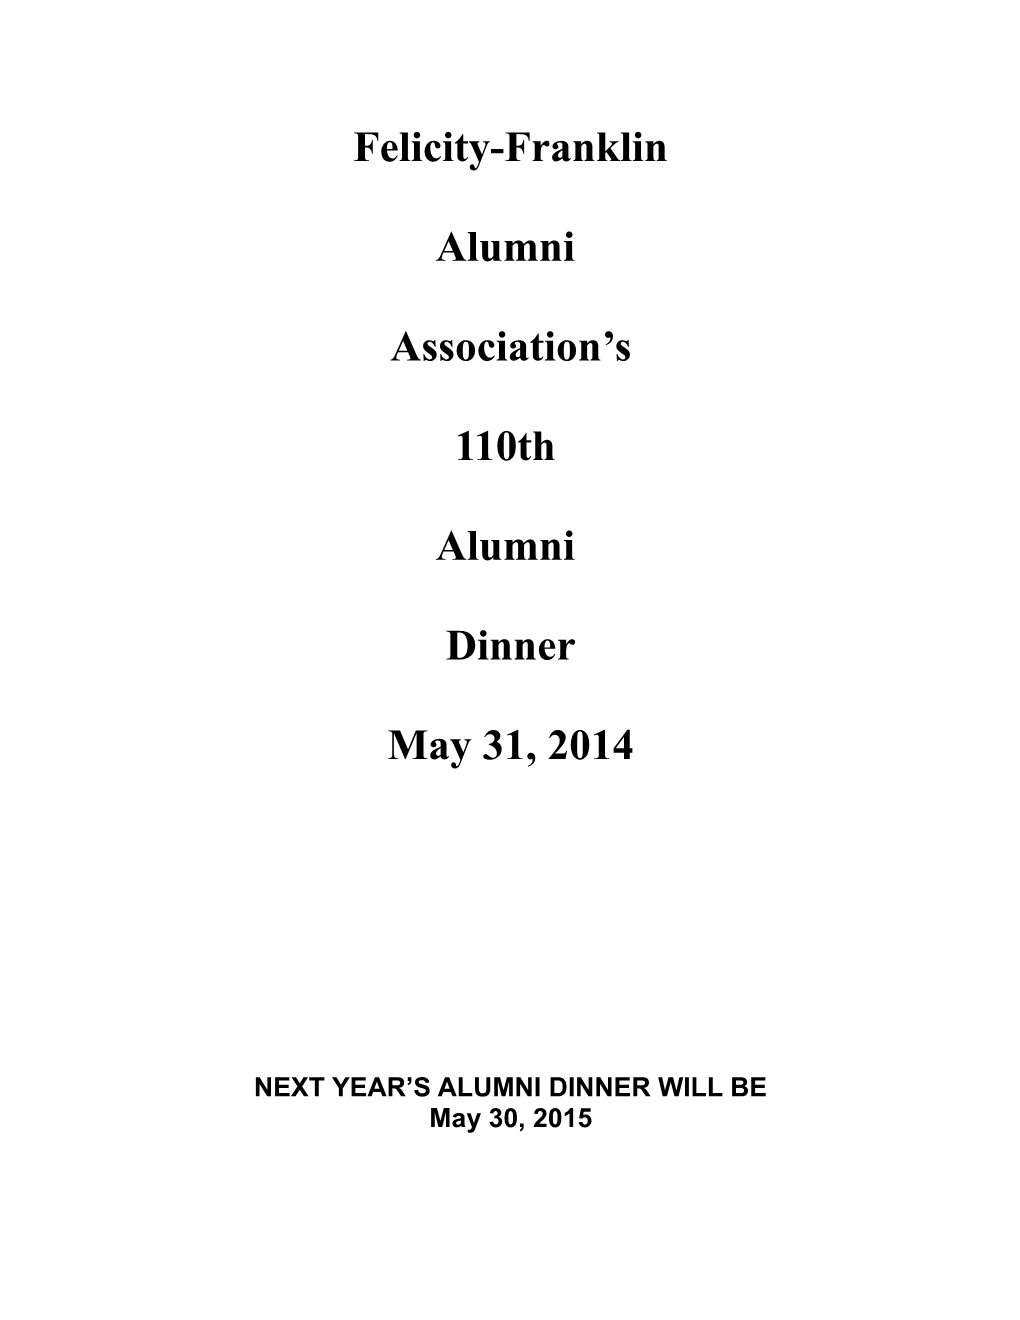 Next Year S Alumni Dinner Will Be